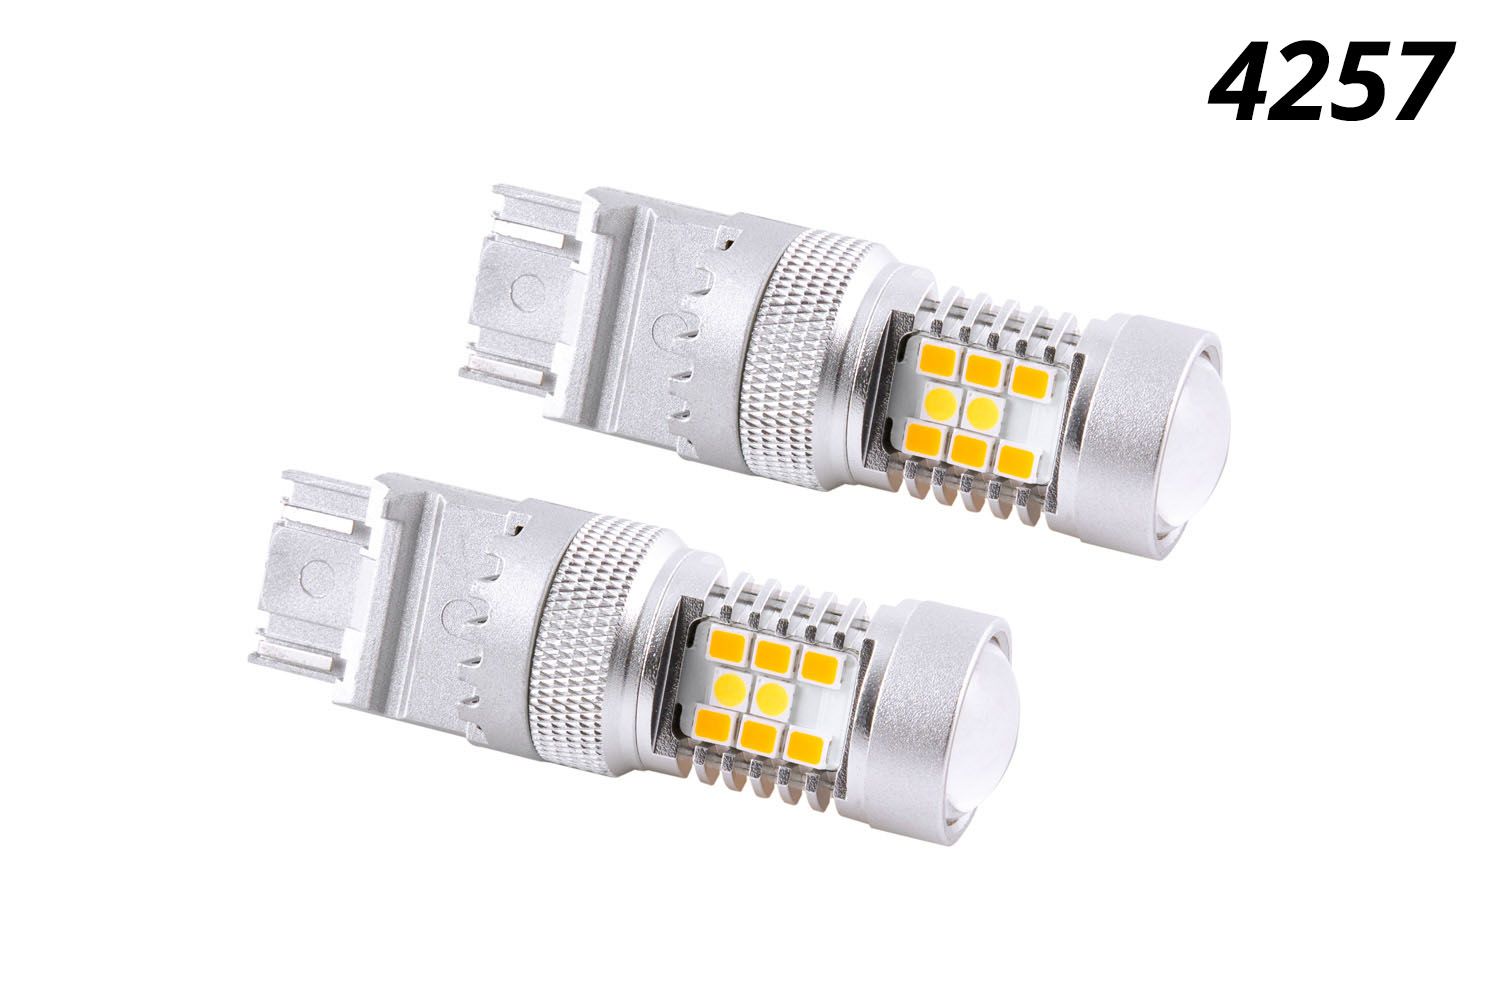 Diode Dynamics DD0462P HP24 LED Bulbs (4257, Cool White)